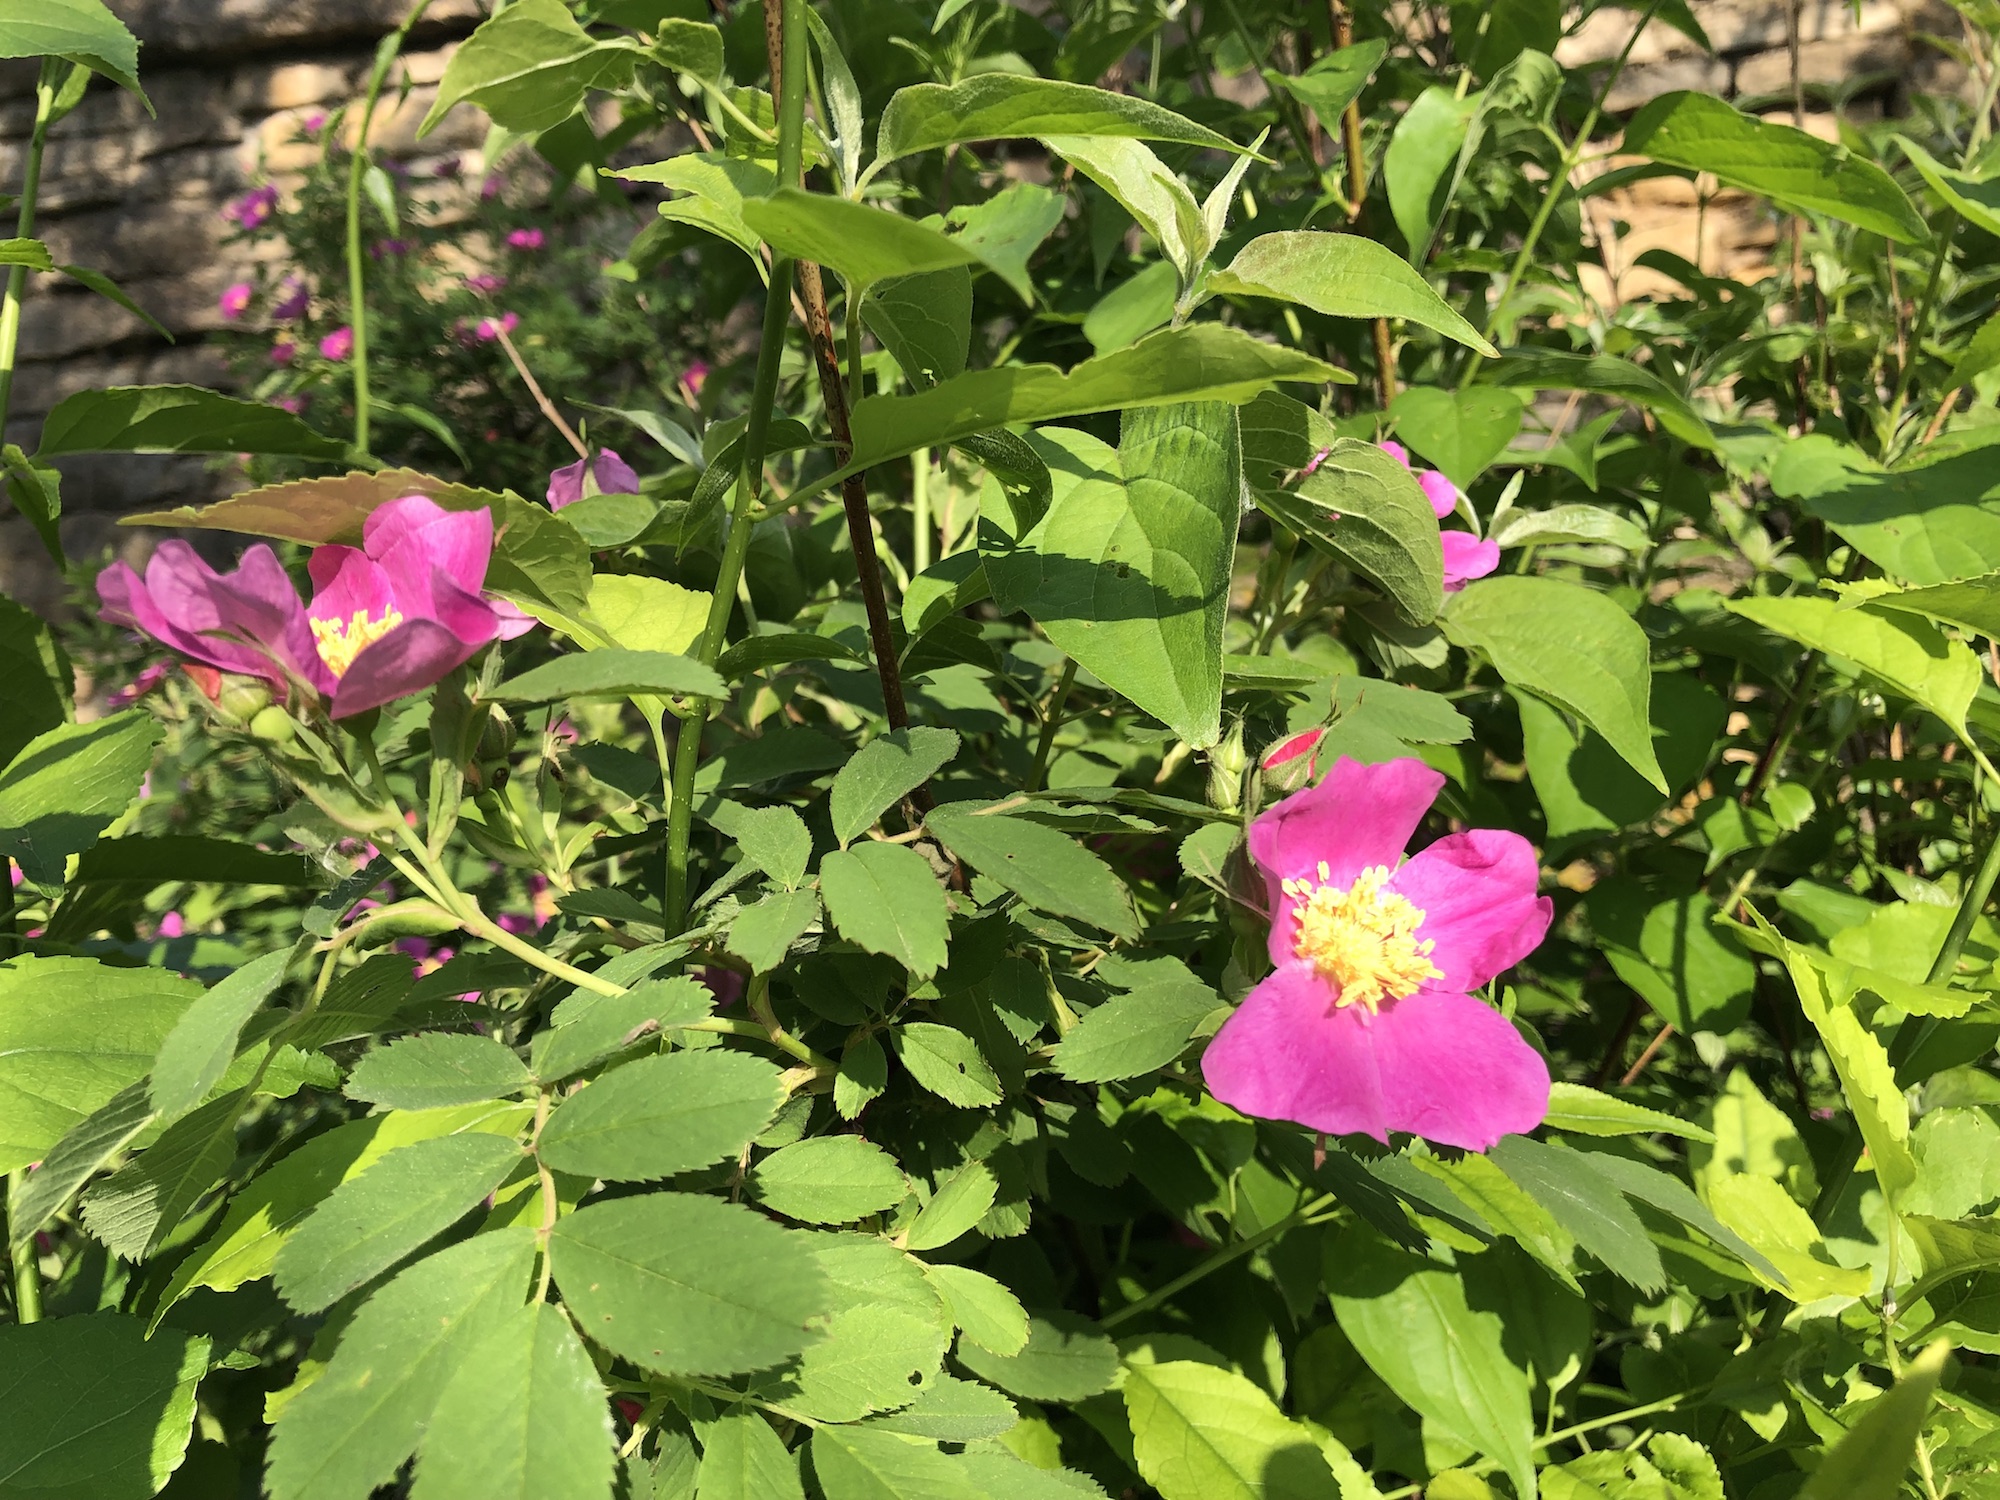 Prairie Rose (Rosa arkansana) at the Duck Pond in Madison, Wisconsin on June 6, 2019.